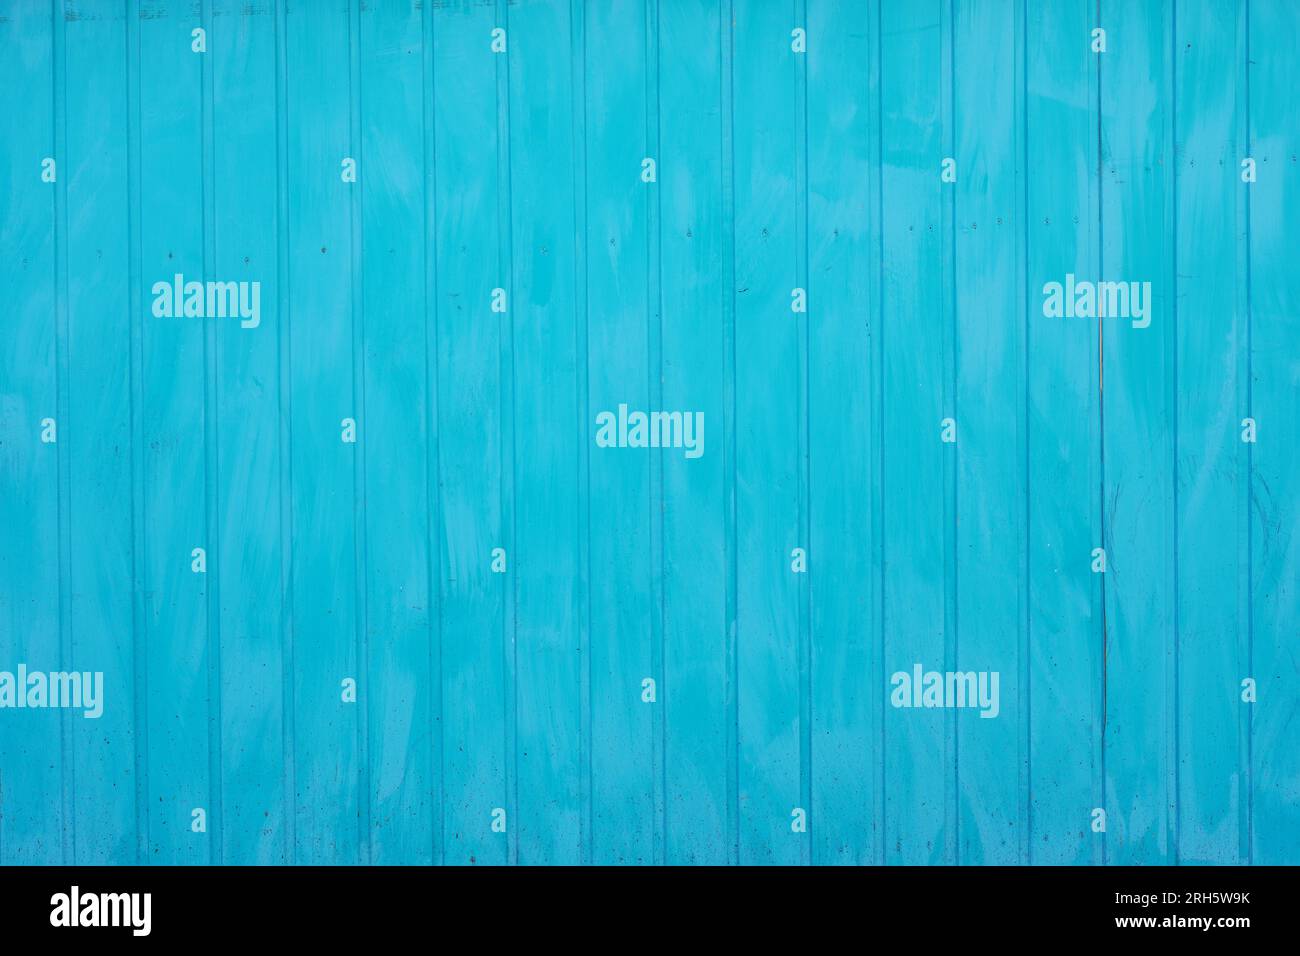 cyan blue wooden wall paneling background Stock Photo